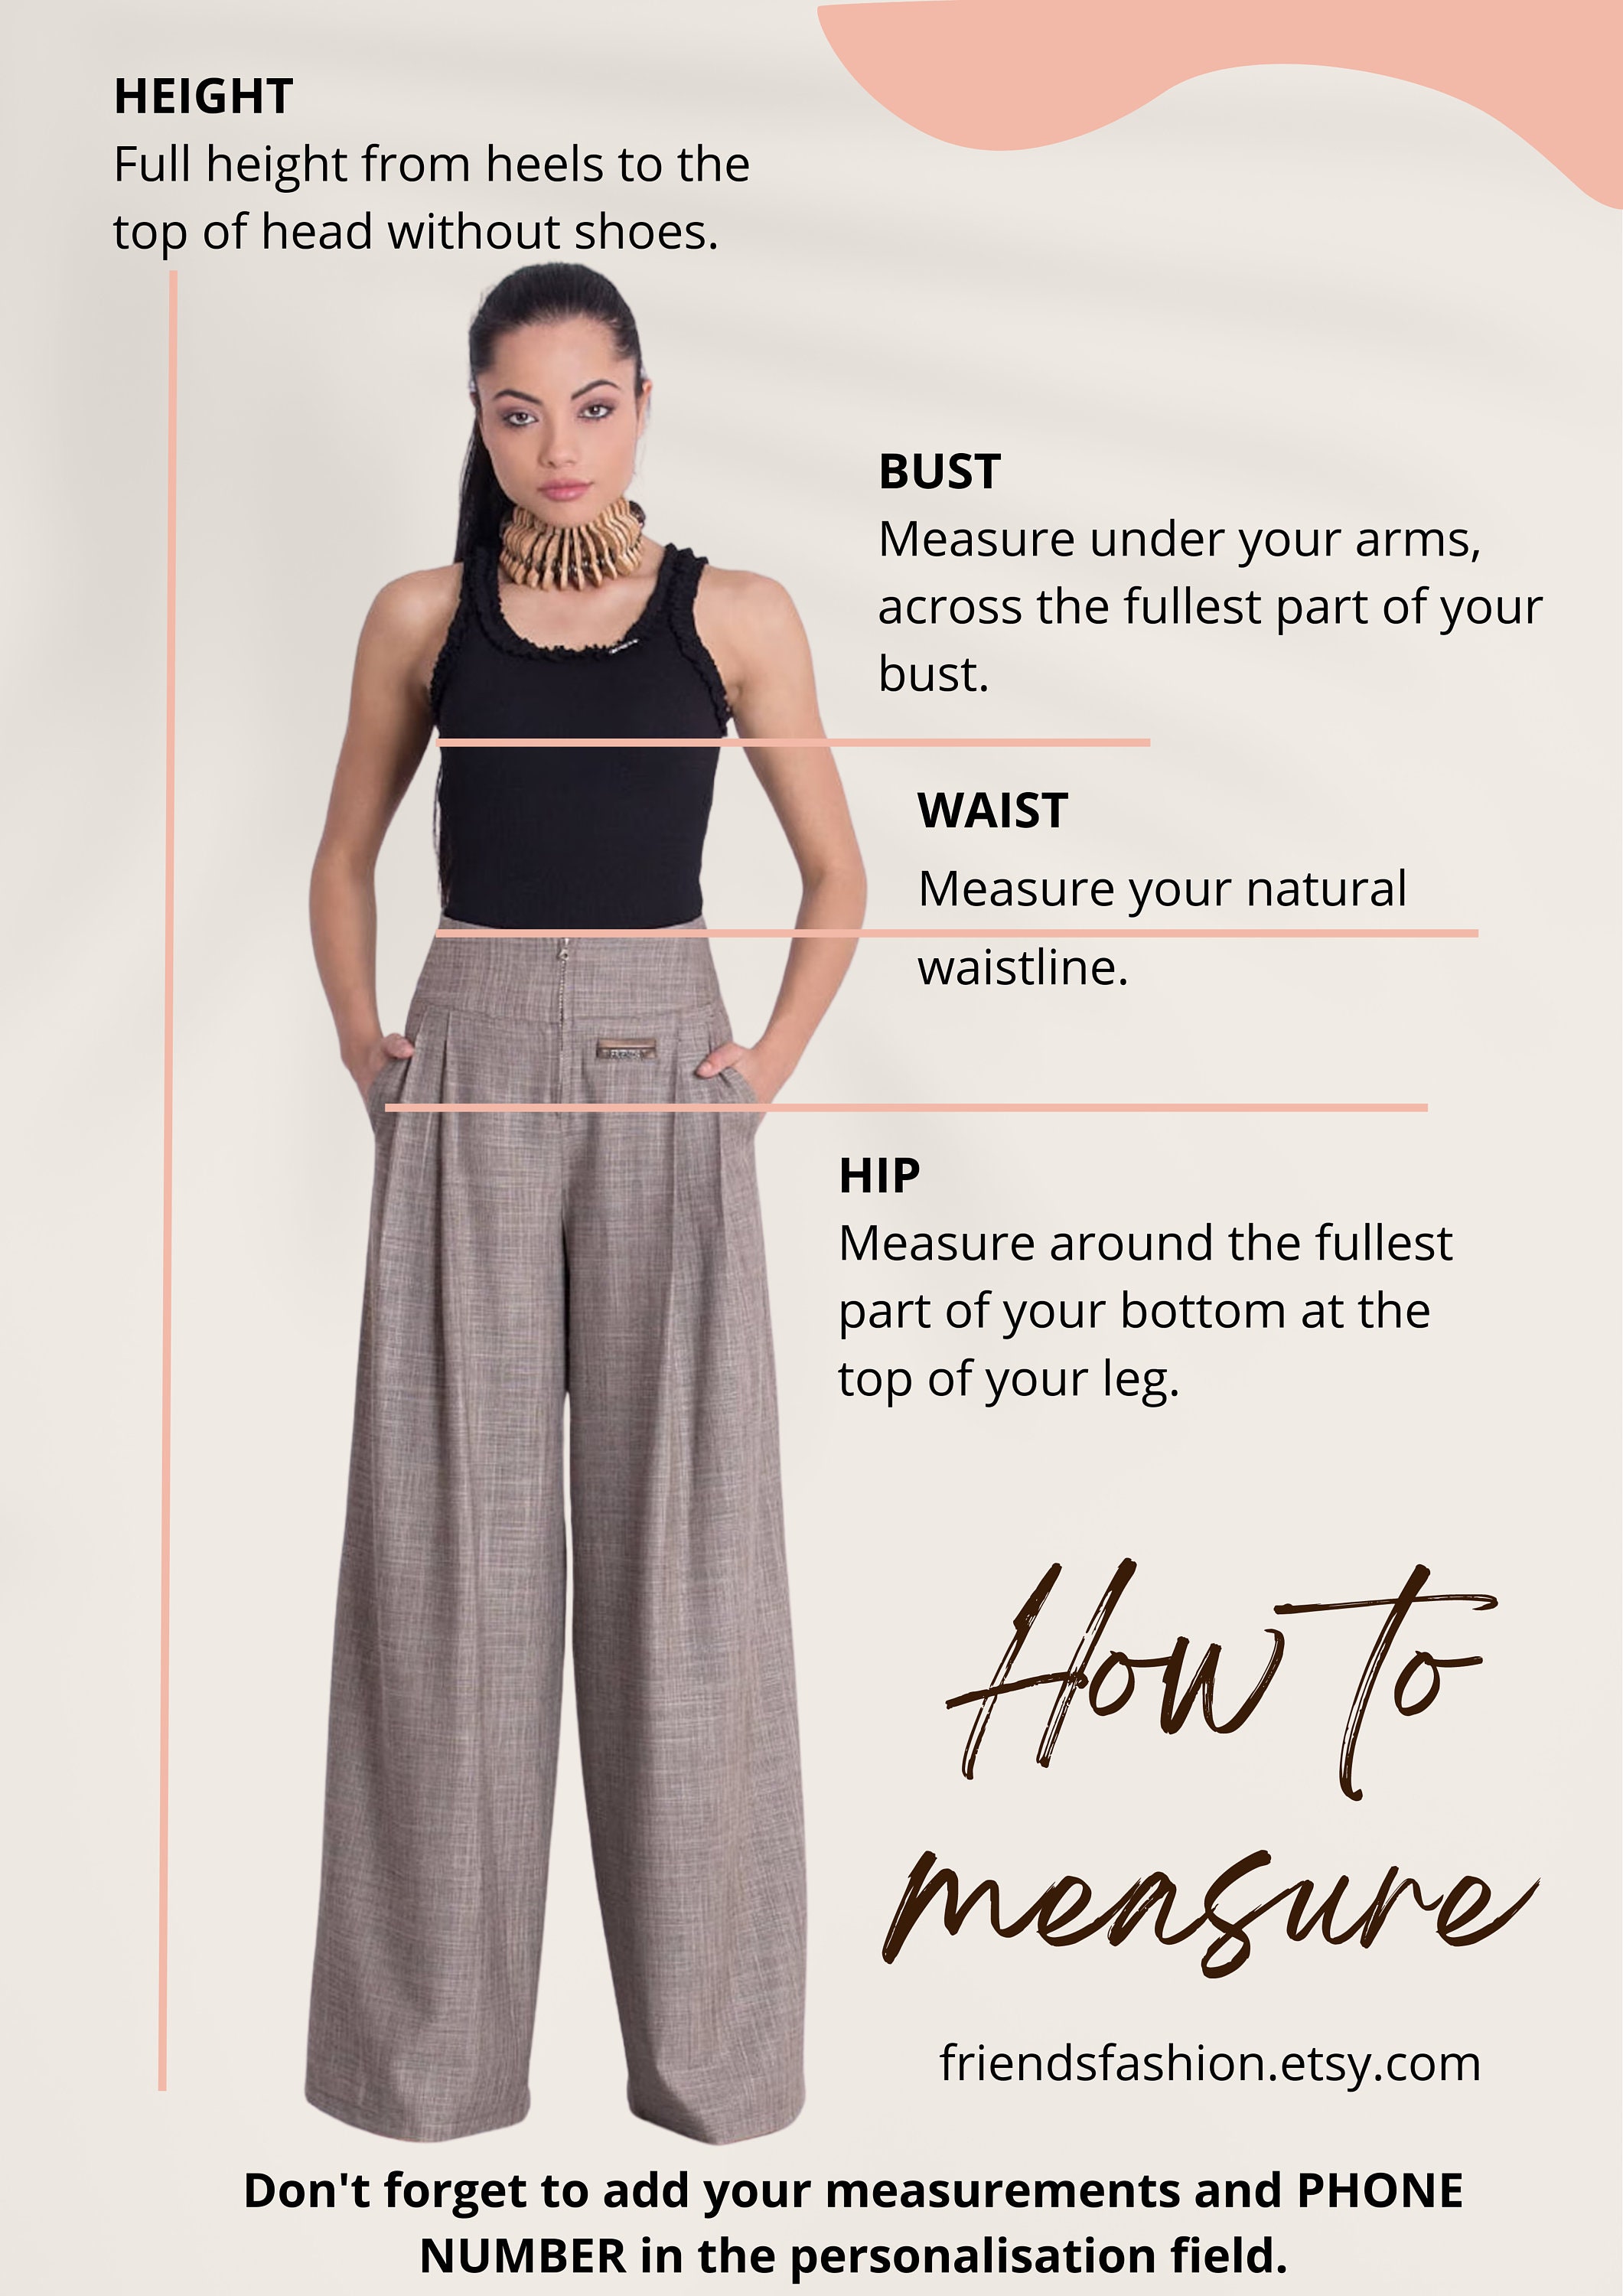 Harem Pants Drop-Crotch w/Pockets - Black Mesh Sheer Joggers Women's–  Peridot Clothing